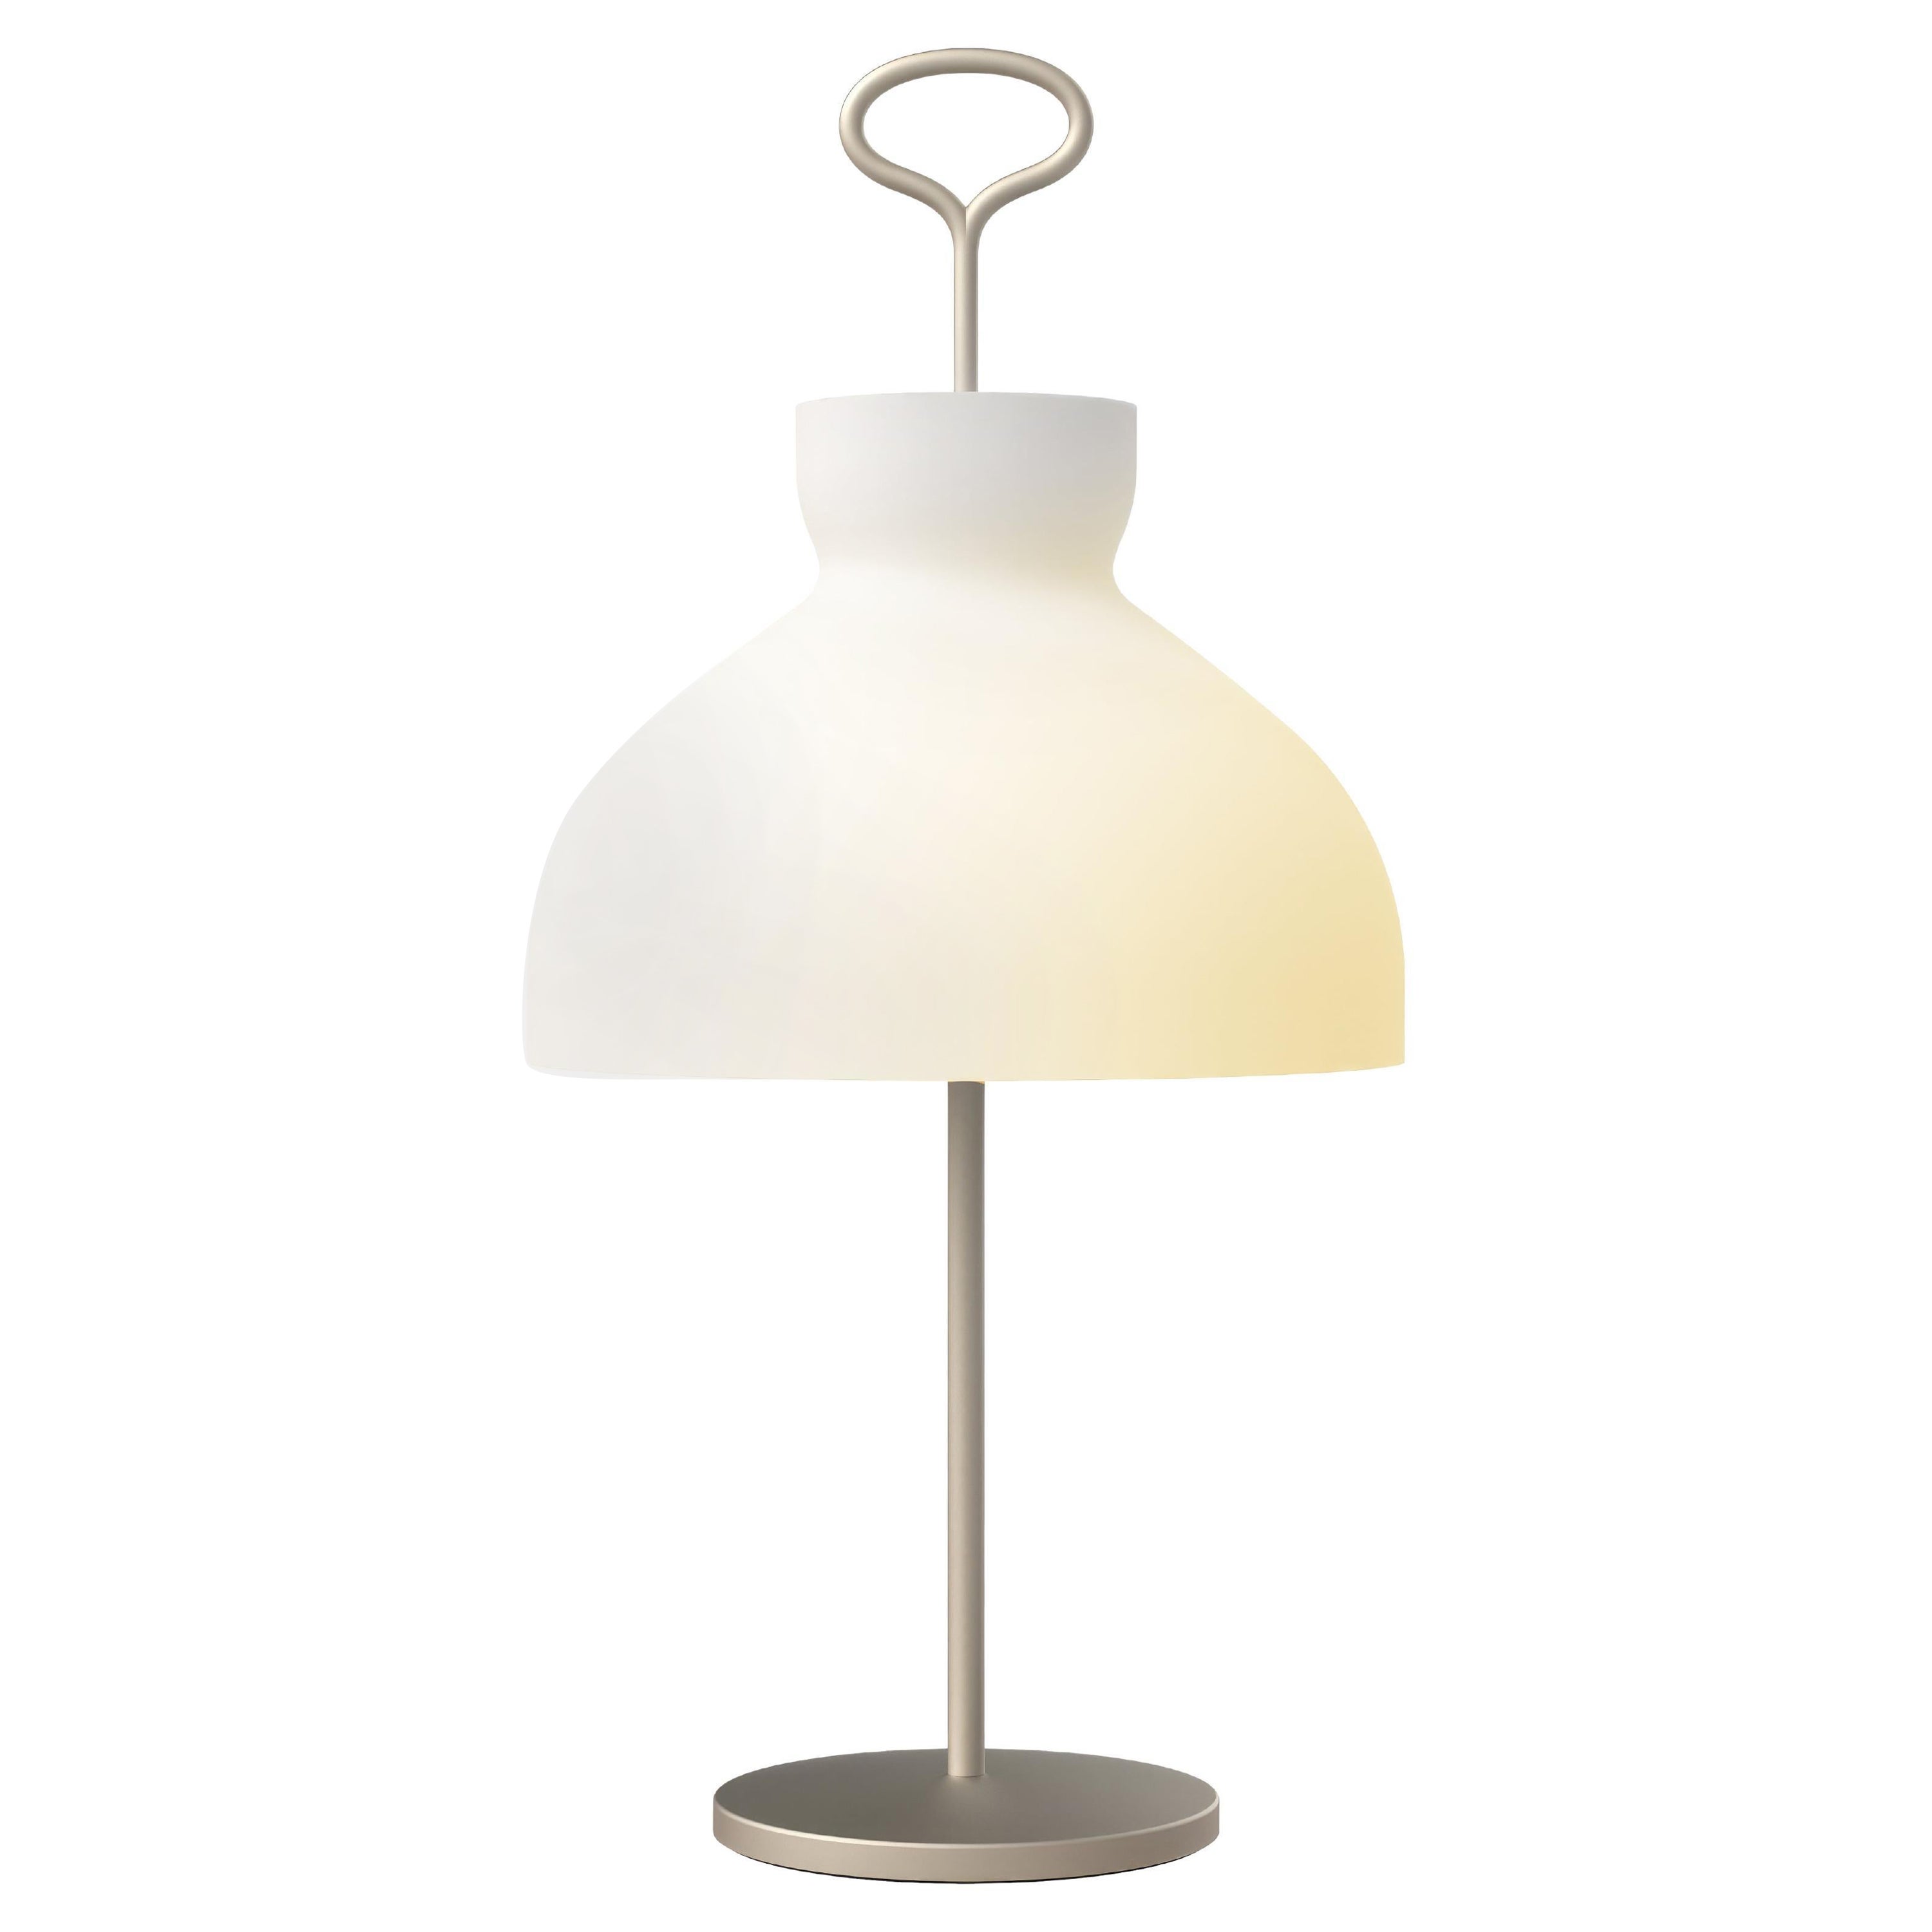 Large Ignazio Gardella 'Arenzano' Table Lamp in Satin Nickel and Glass For Sale